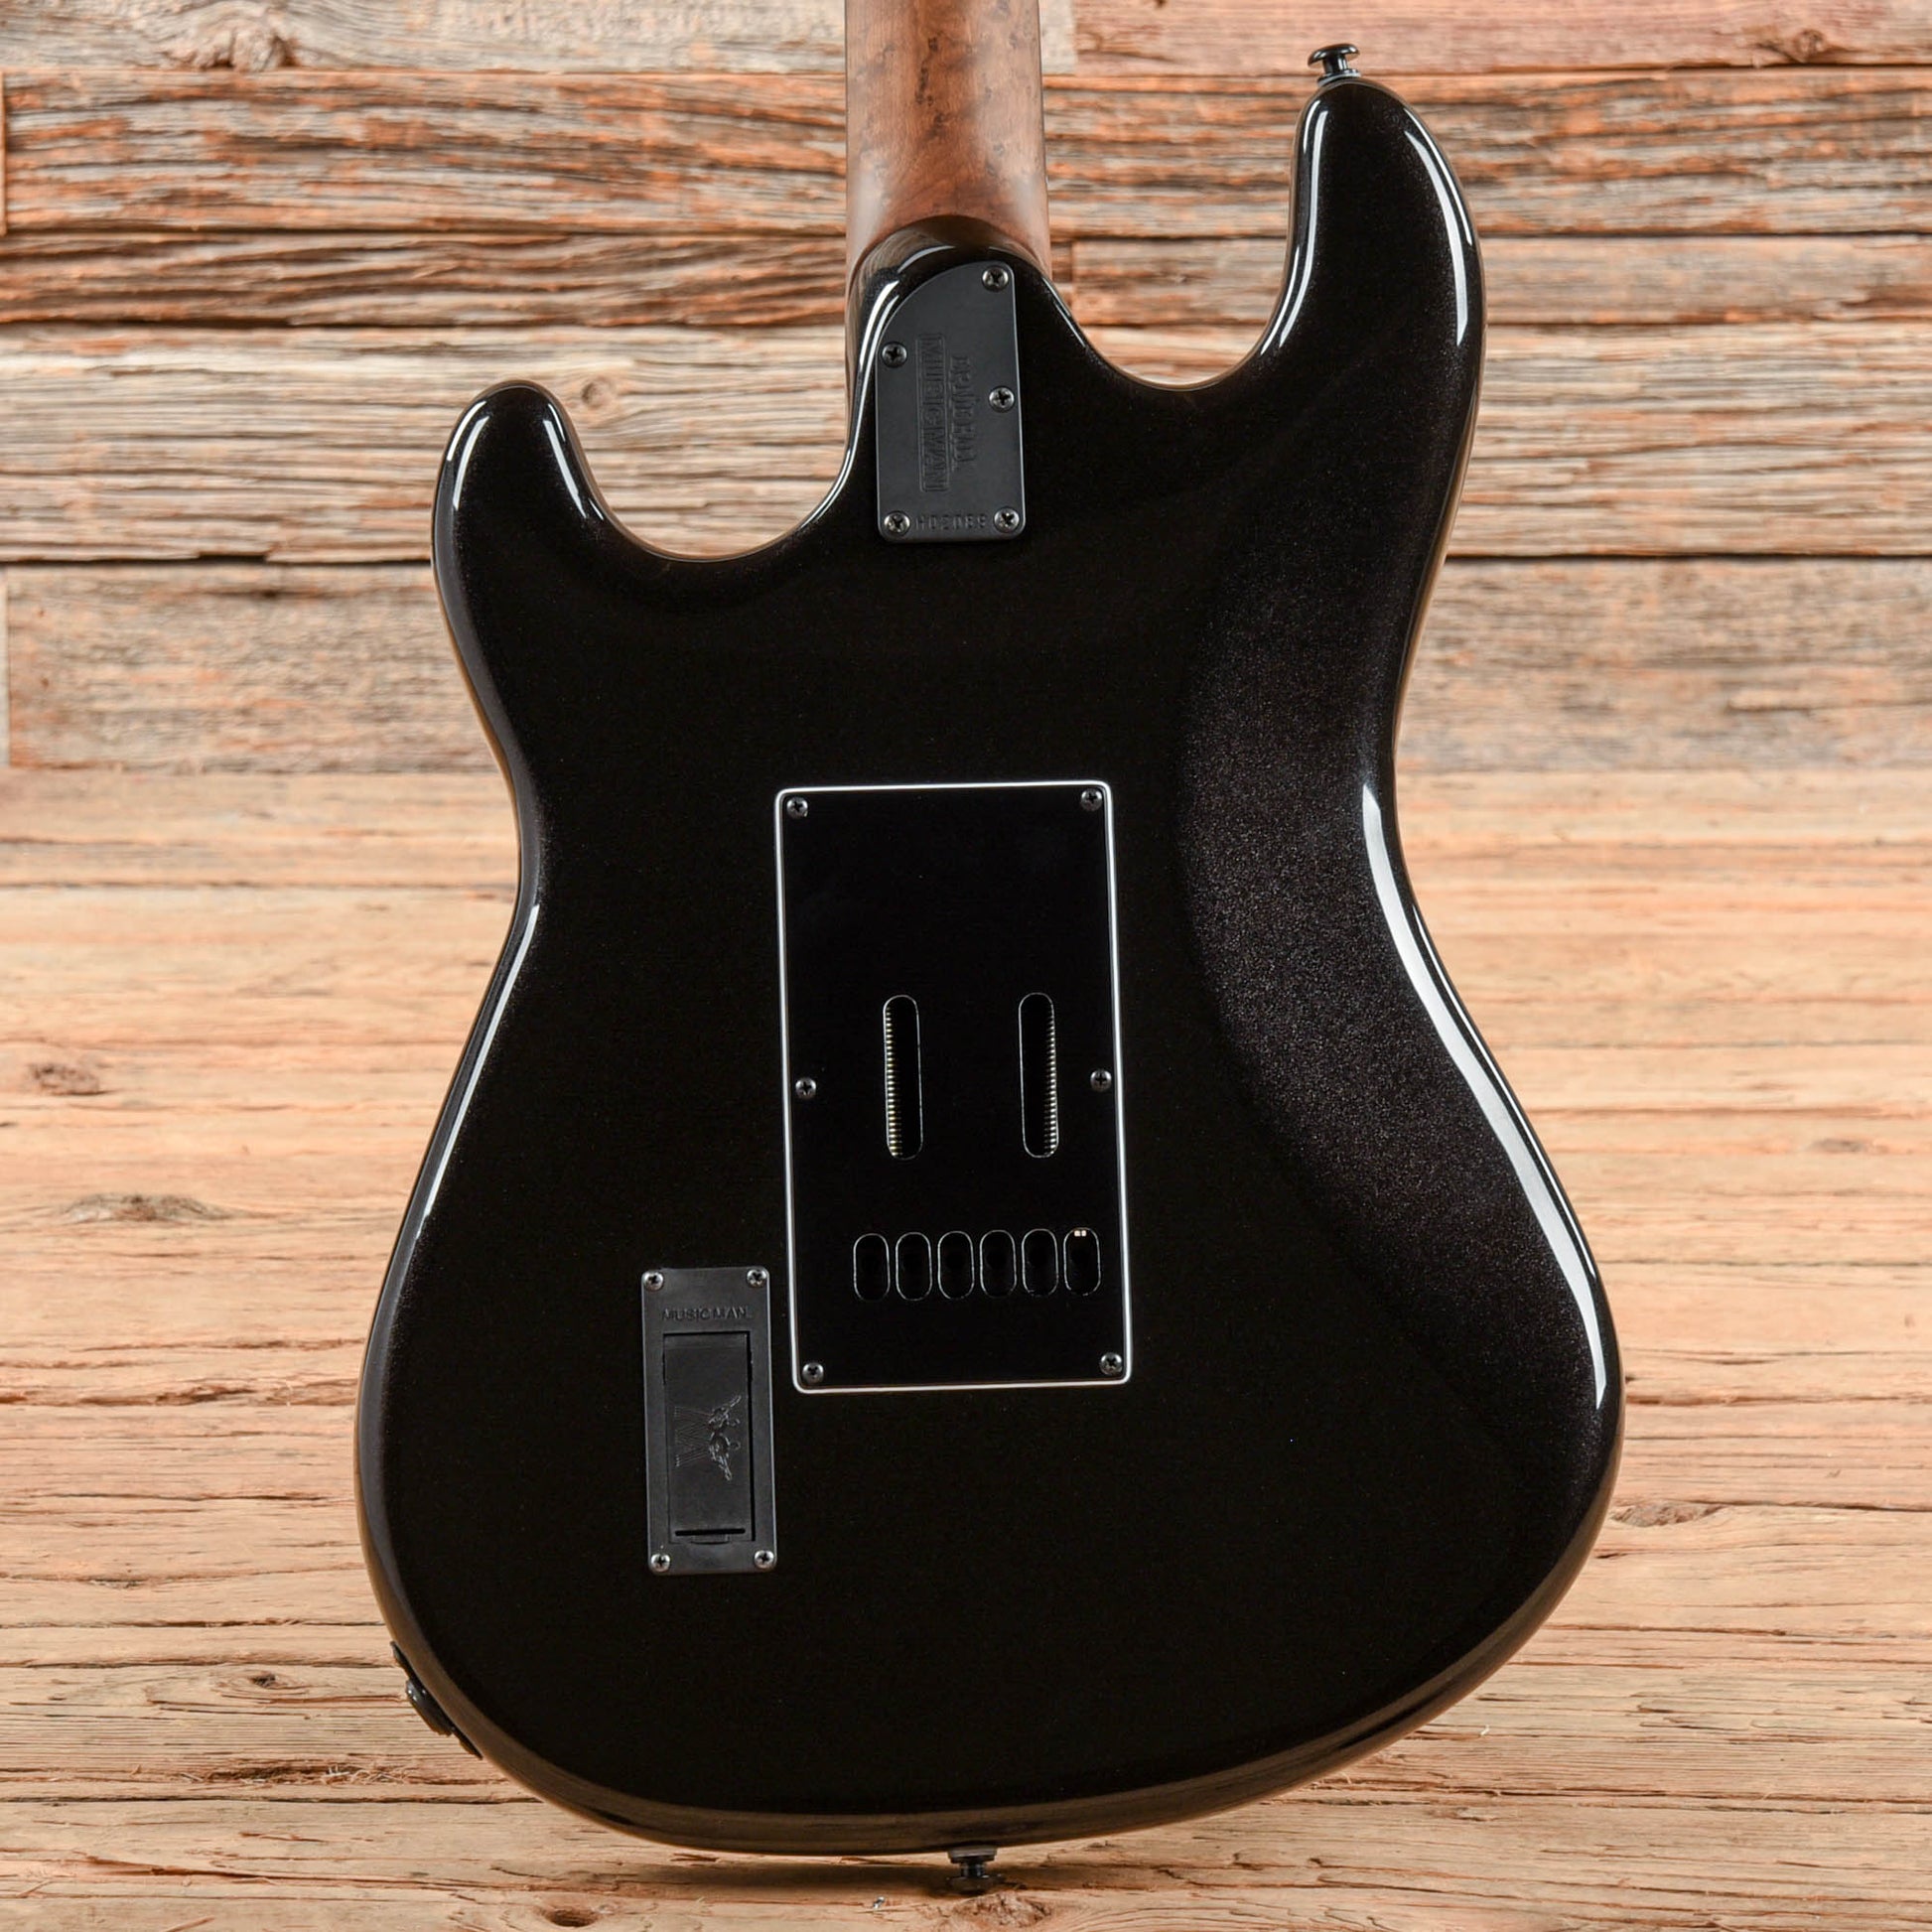 Music Man Cutlass HT SSS Midnight Rider 2022 Electric Guitars / Solid Body